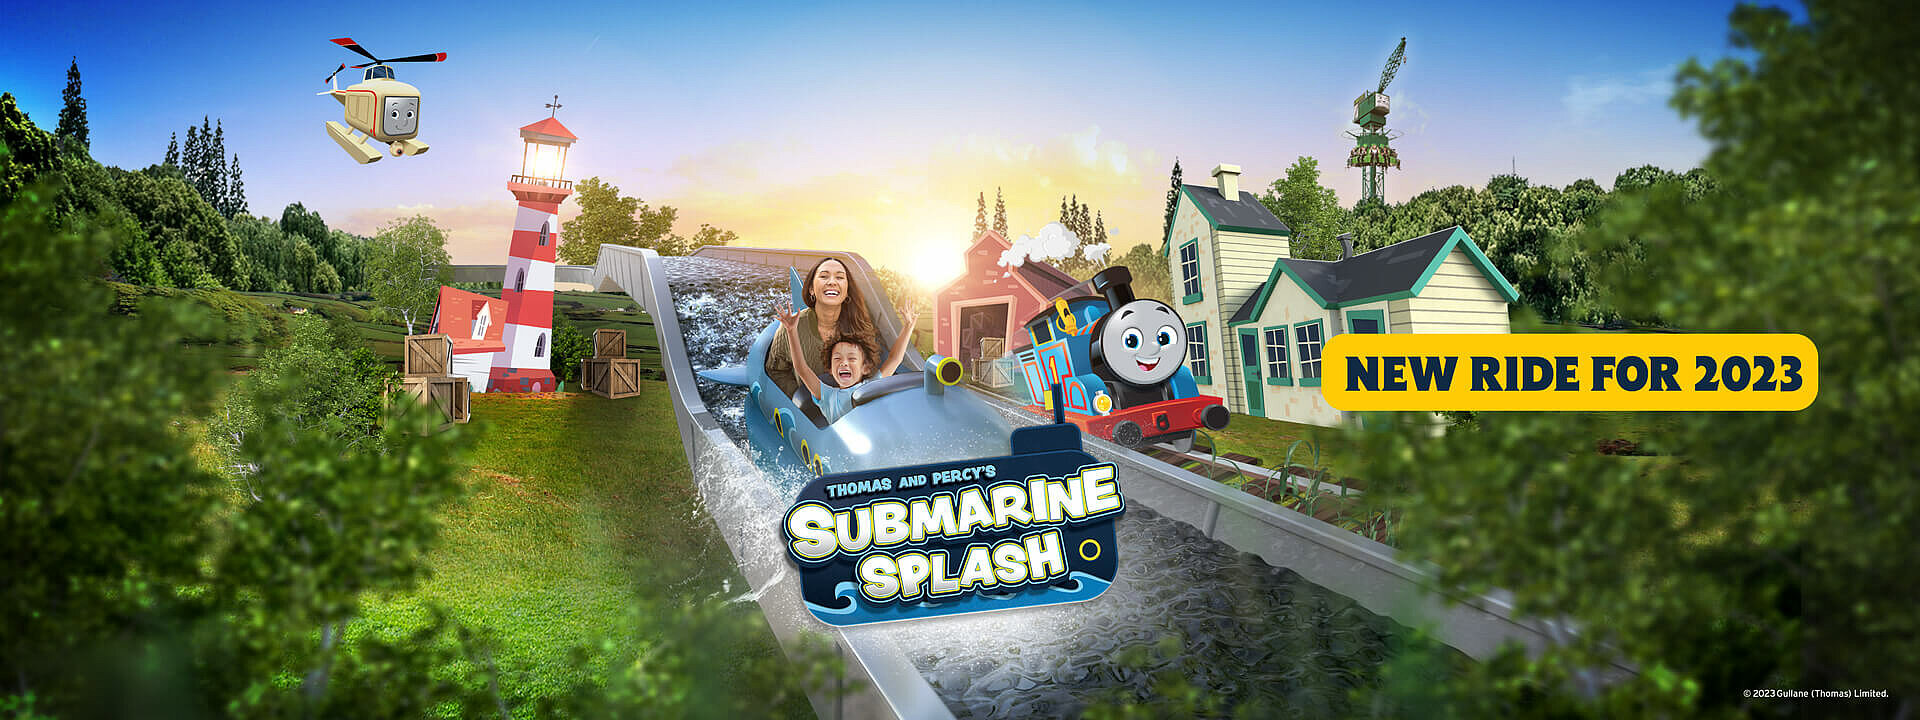 Thomas and Percy's Submarine Splash